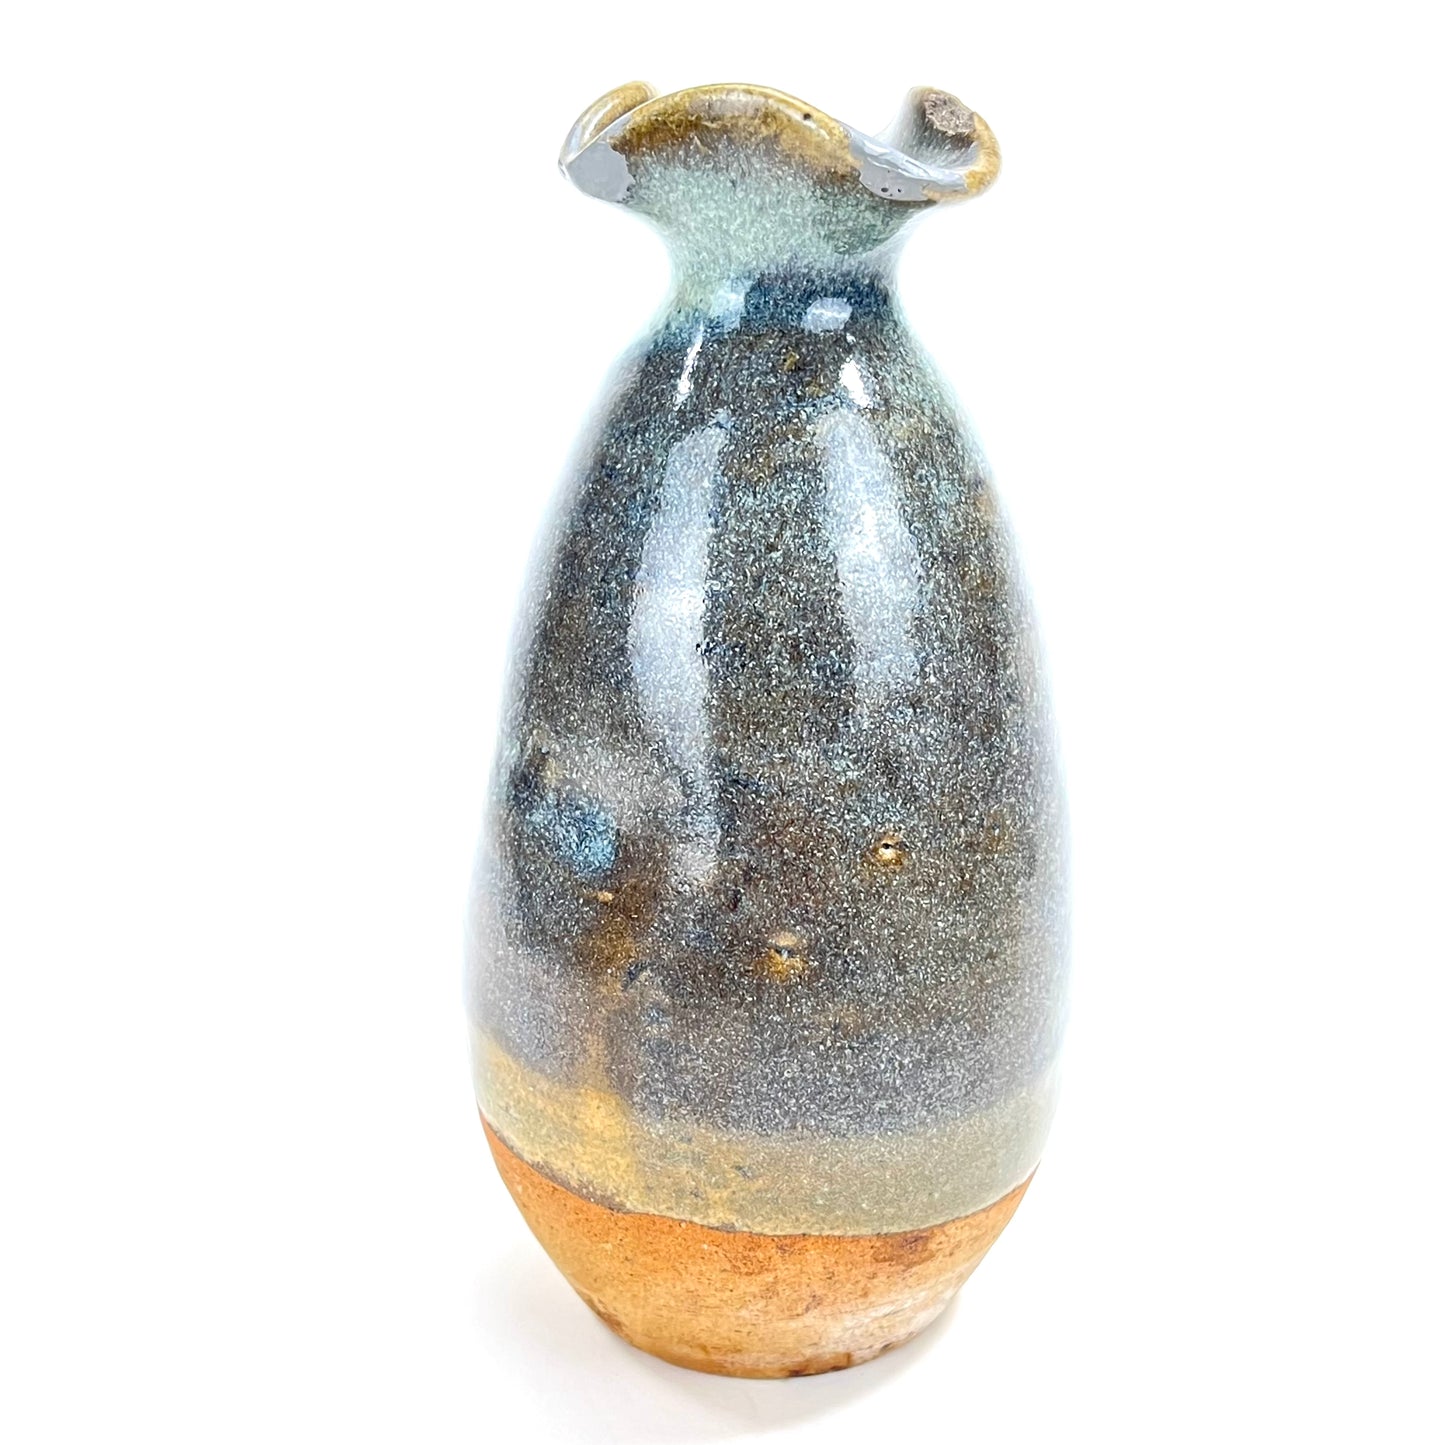 Antique Japanese Sake Bottle Tokkuri Brown&Blue Hares Fur Glaze Spout 8” chipped rim